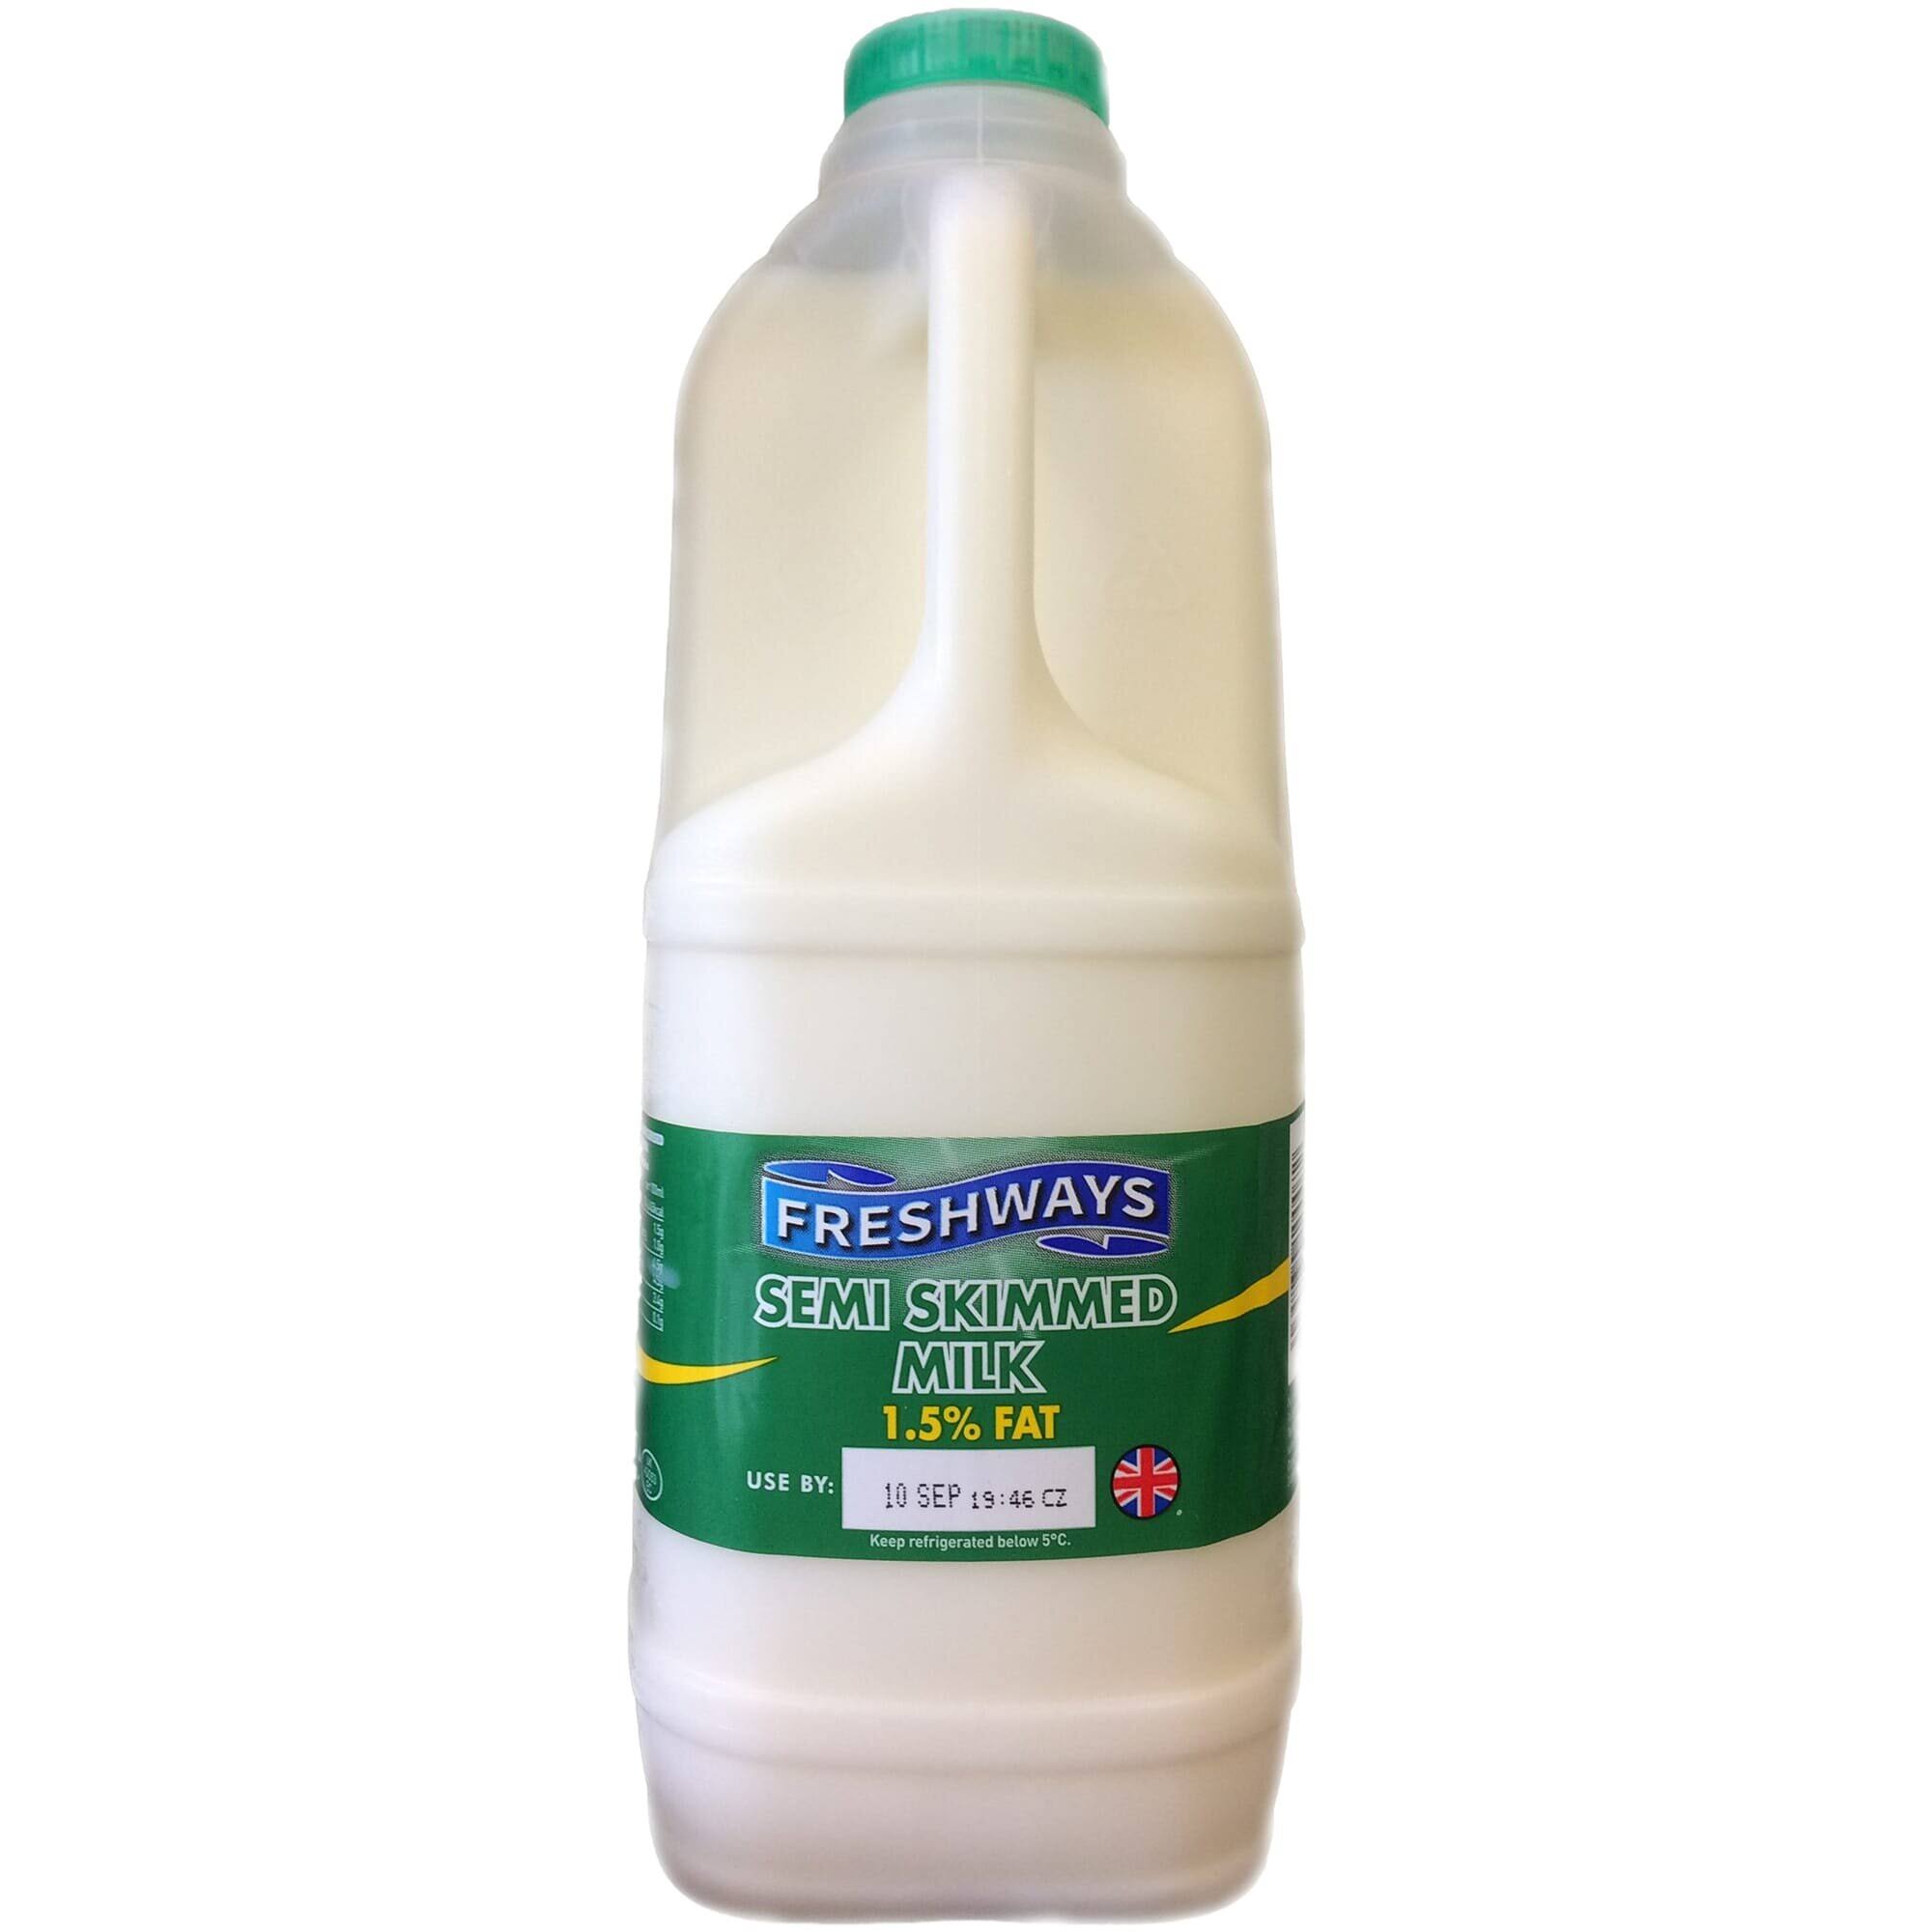 Freshways South East Semi Skimmed Milk - 2L